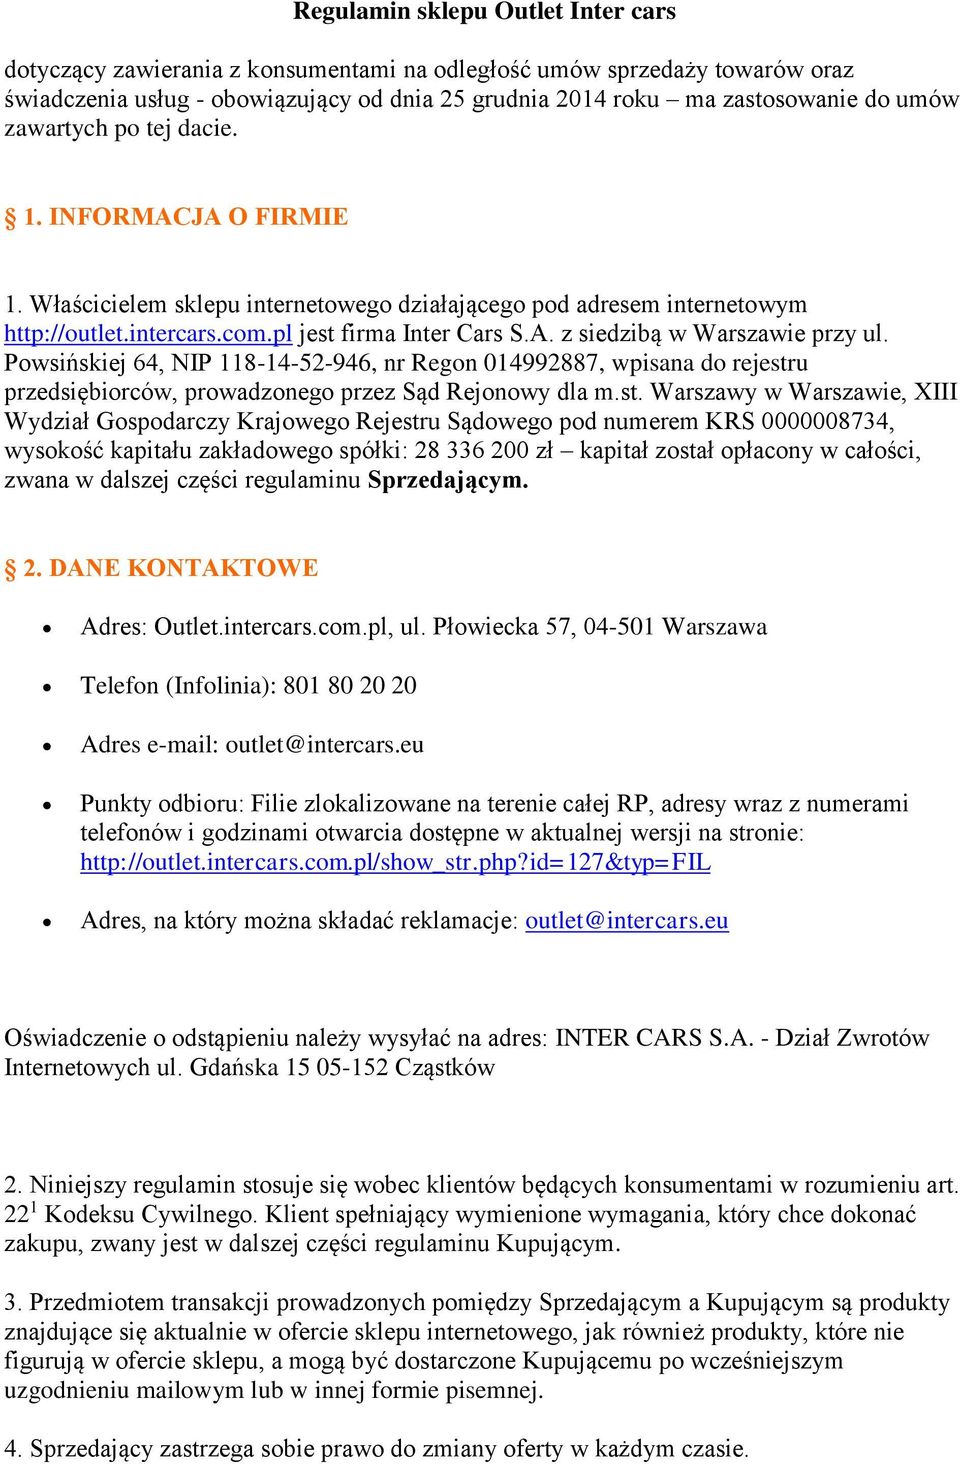 Regulamin sklepu Outlet Inter cars - PDF Darmowe pobieranie